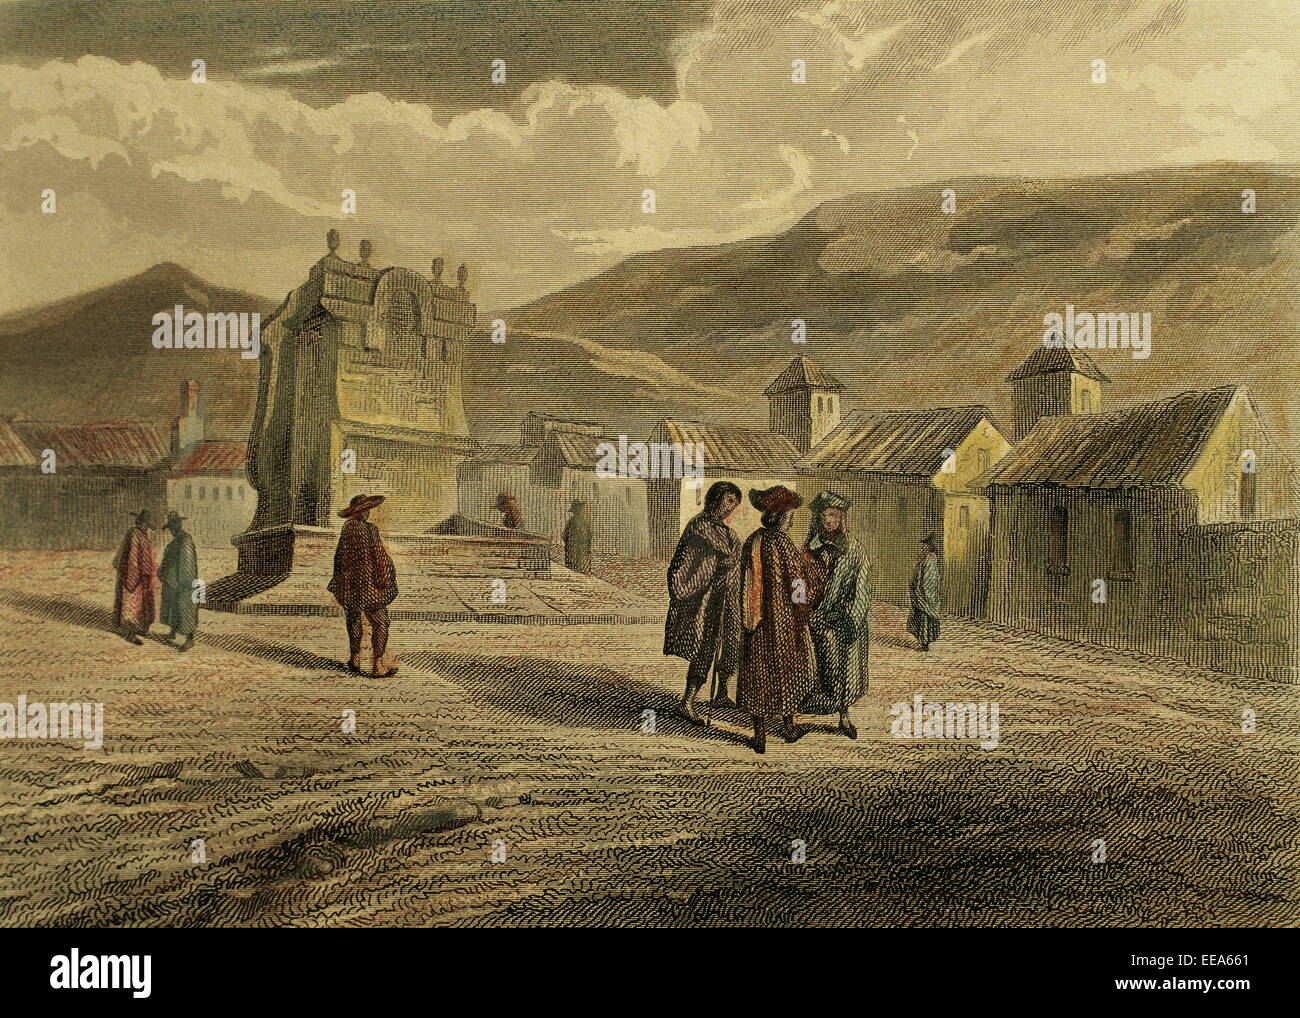 Colombia. Bogota. Founded by Gonzalo Jimenez de Quesada, 1538. Engraving, 1850. Color. Stock Photo